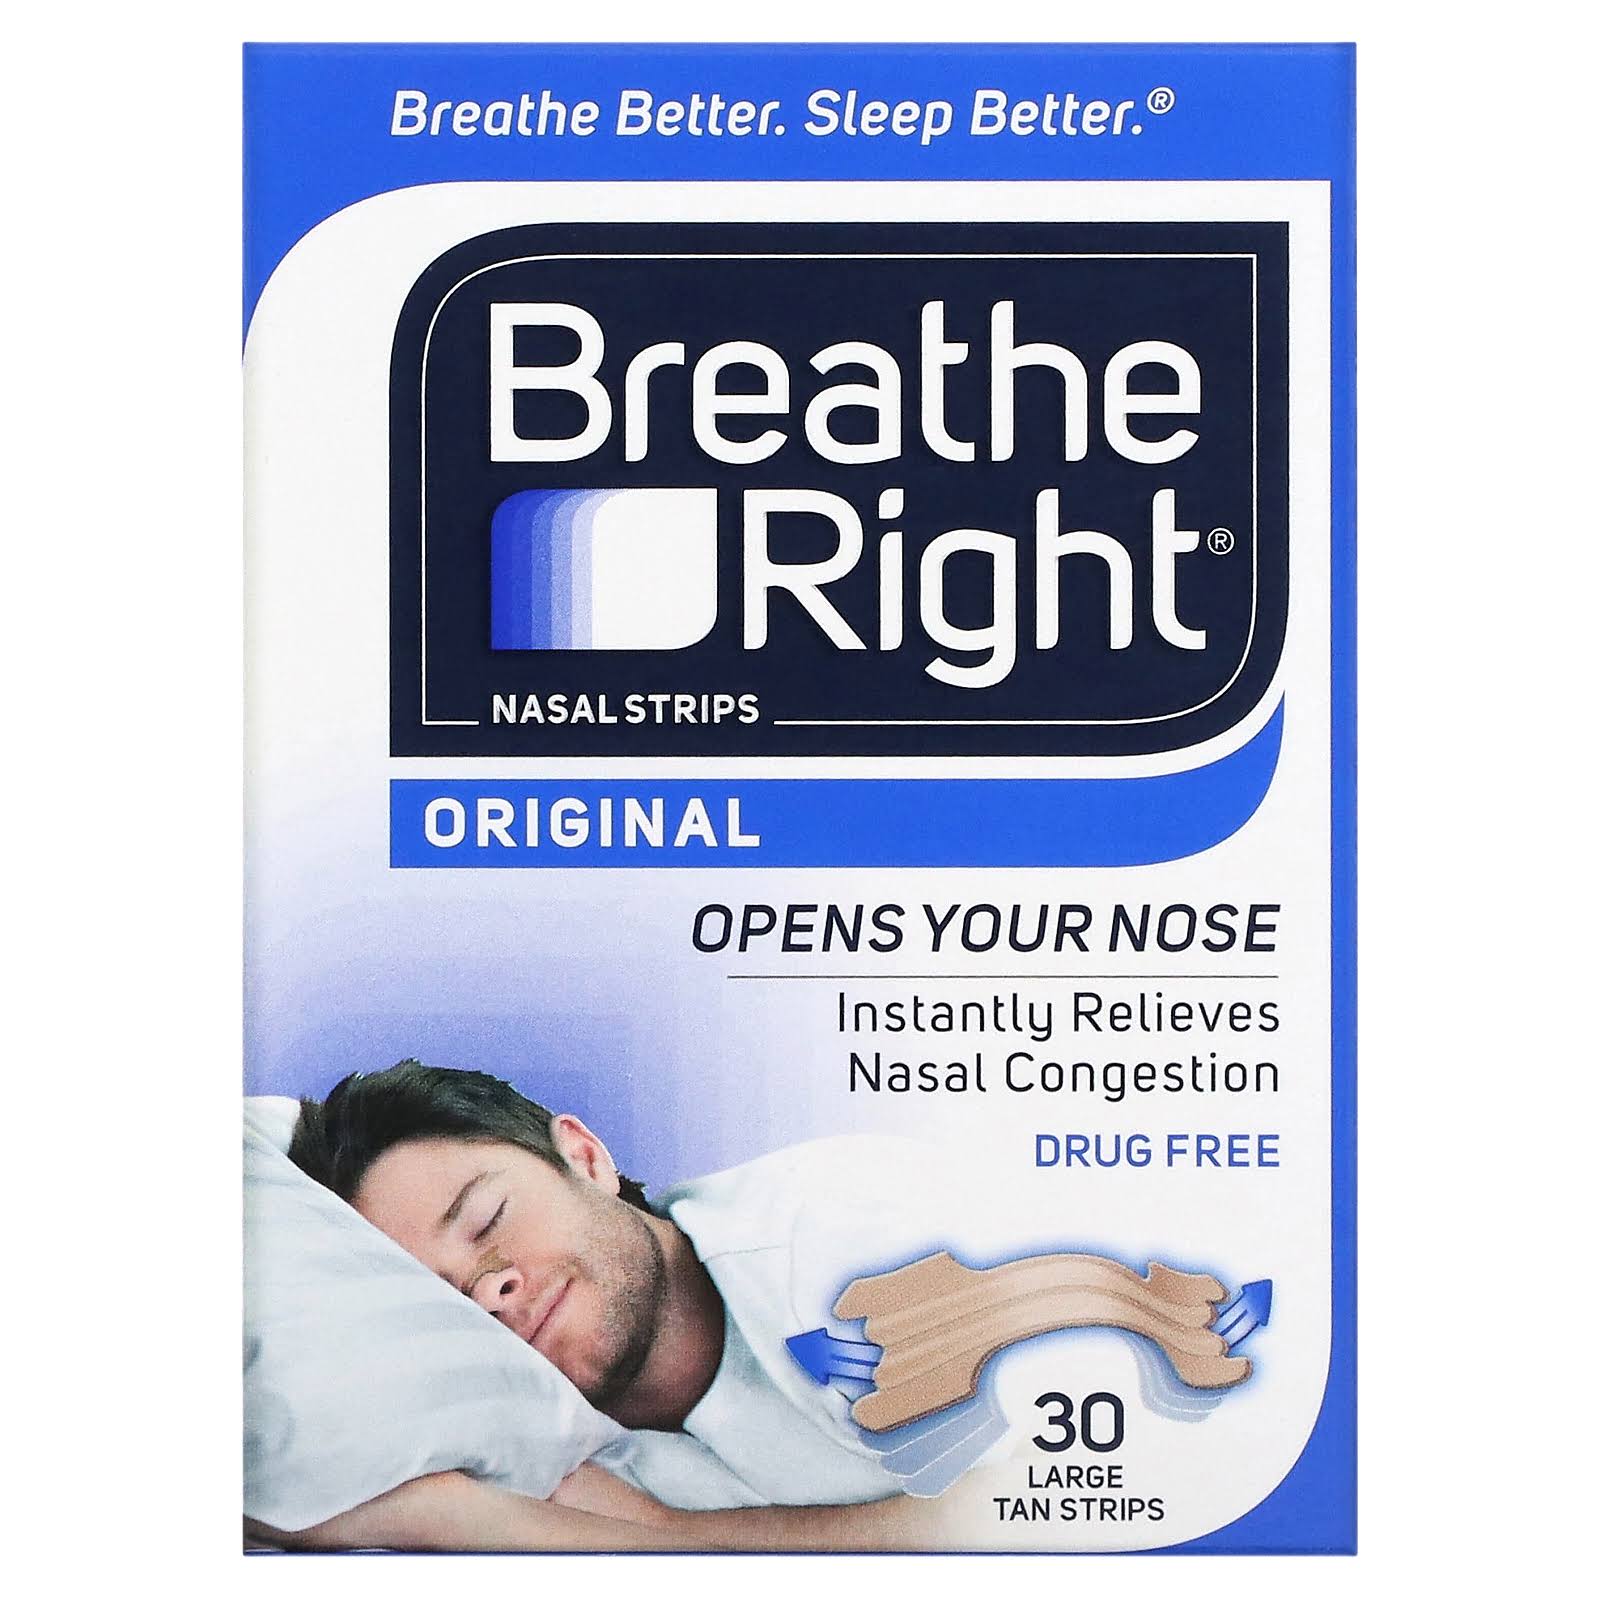 Breathe Right, Nasal Strips, Original, Large, 30 Tan Strips